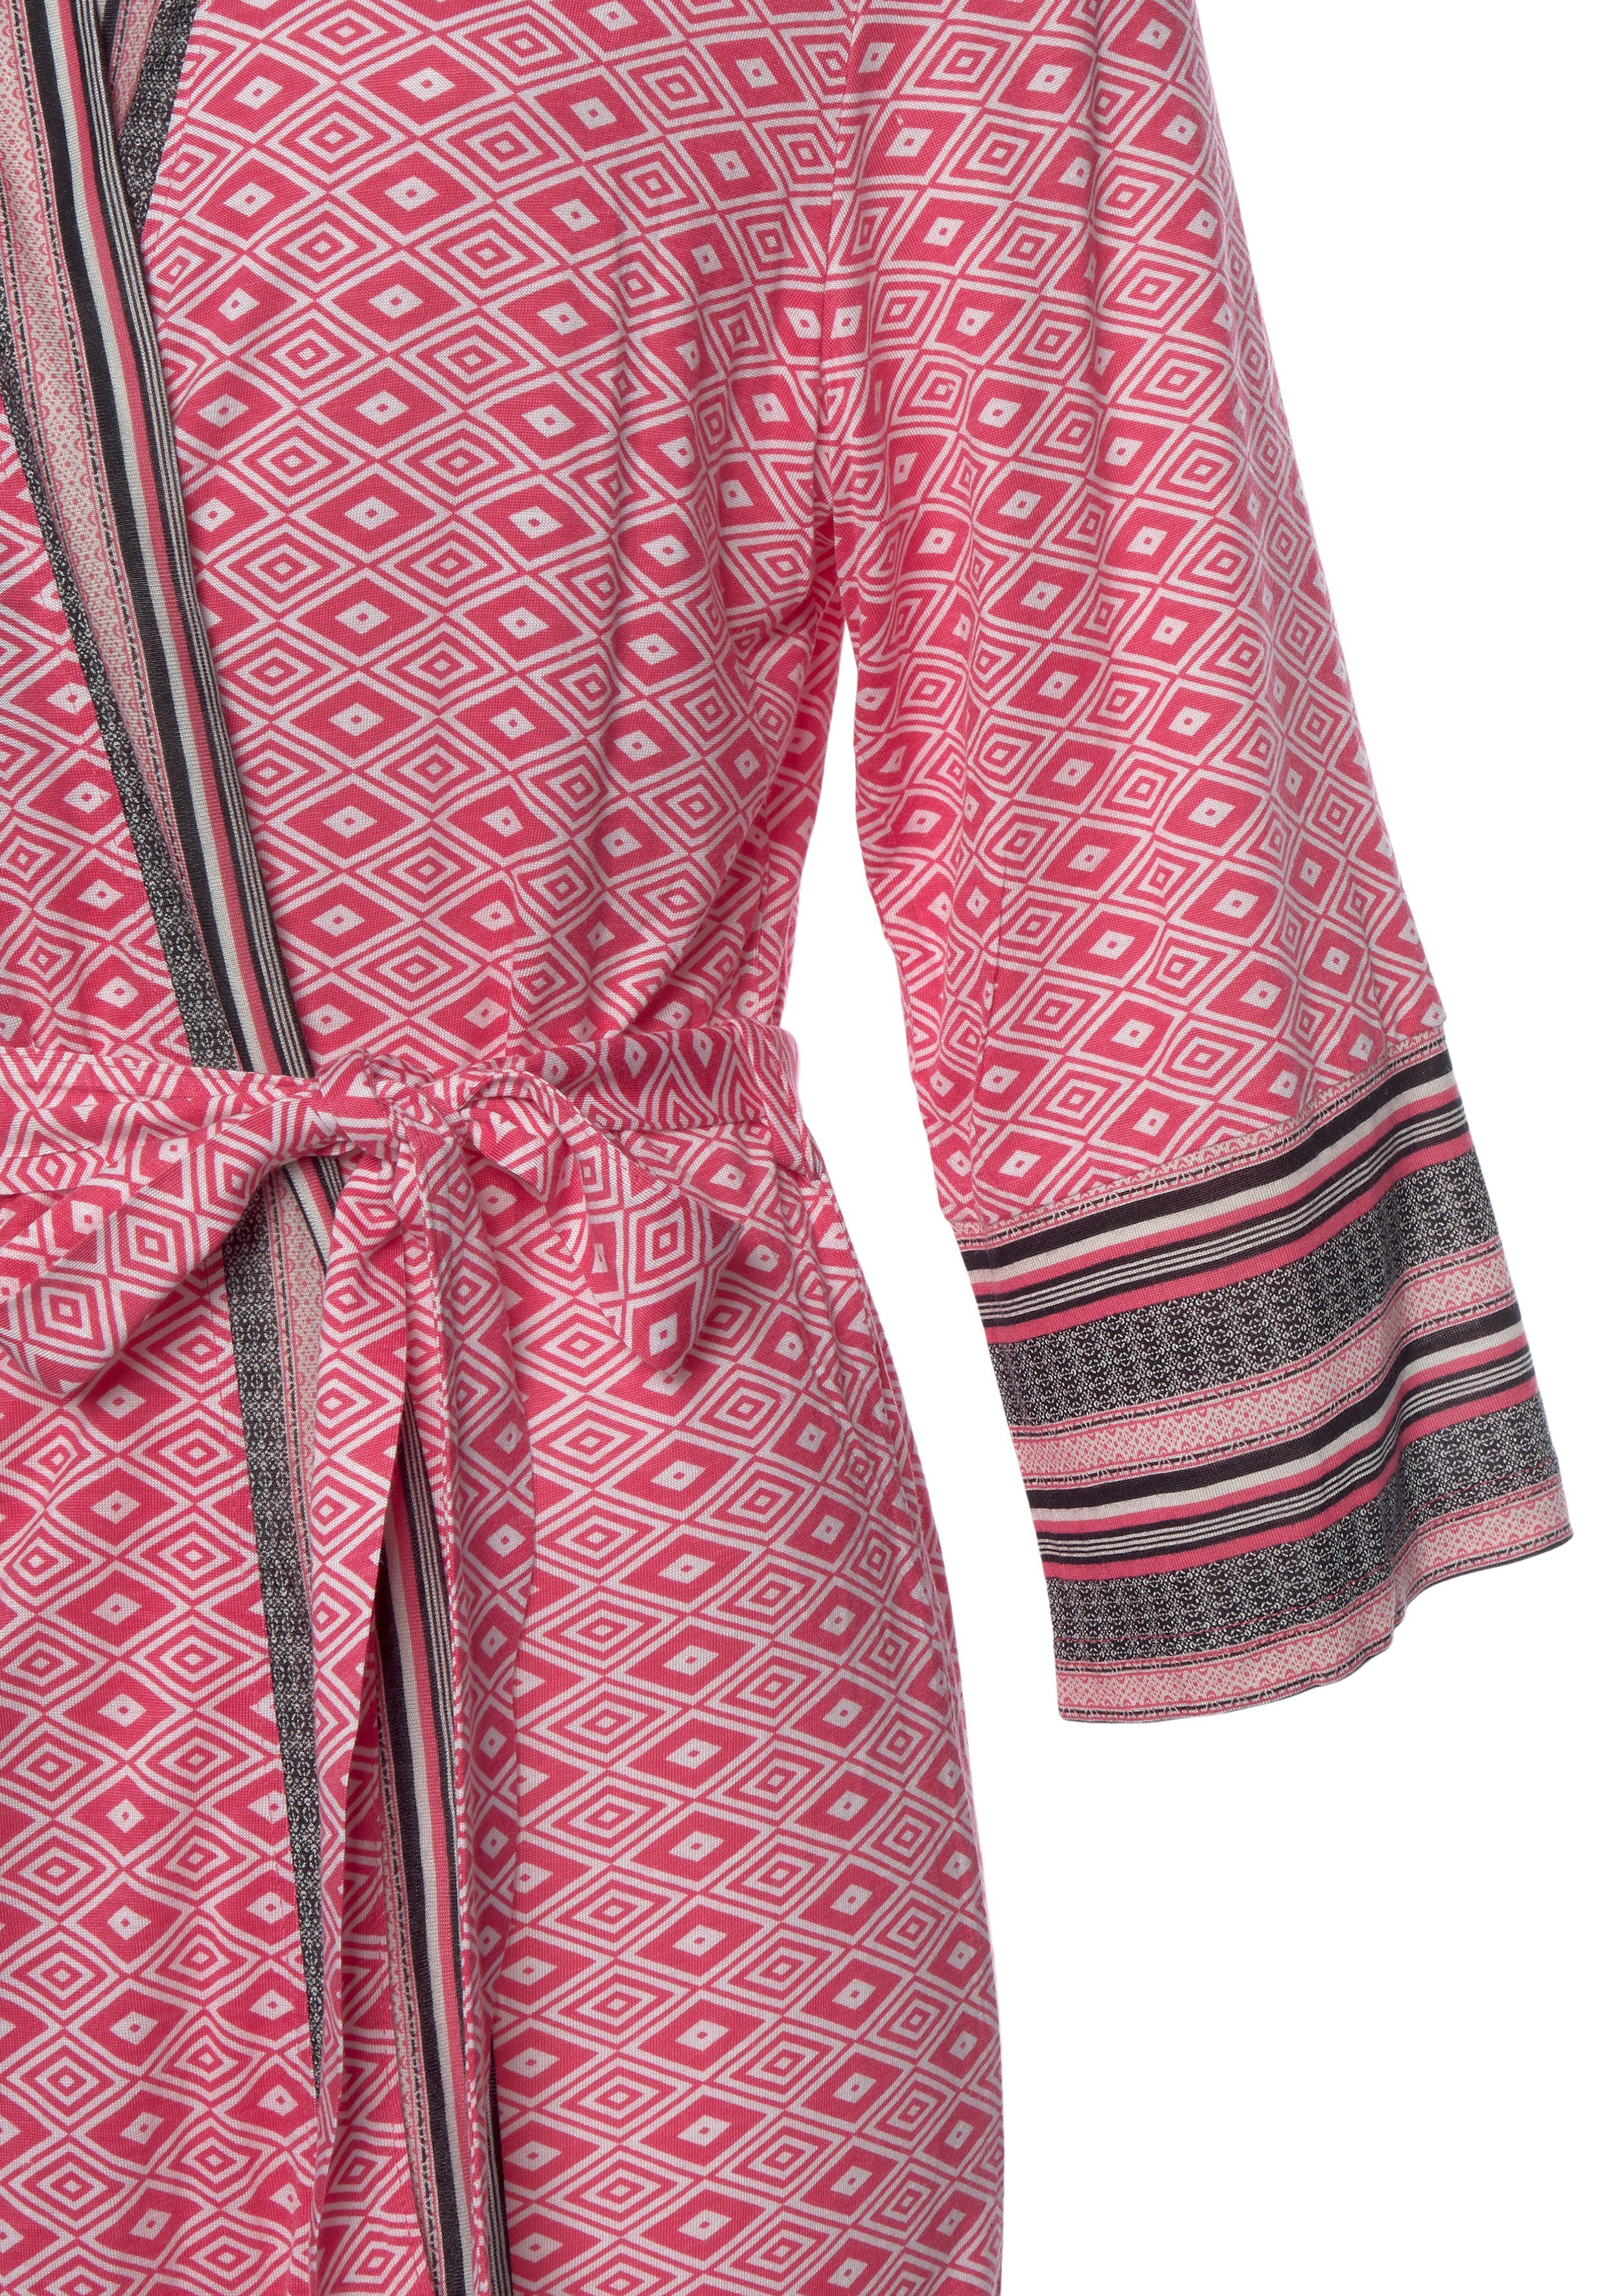 Vivance in Gürtel, Single-Jersey, pink Kurzform, Kimono, gemustert Ethno-Design schönem Dreams Kimono-Kragen,